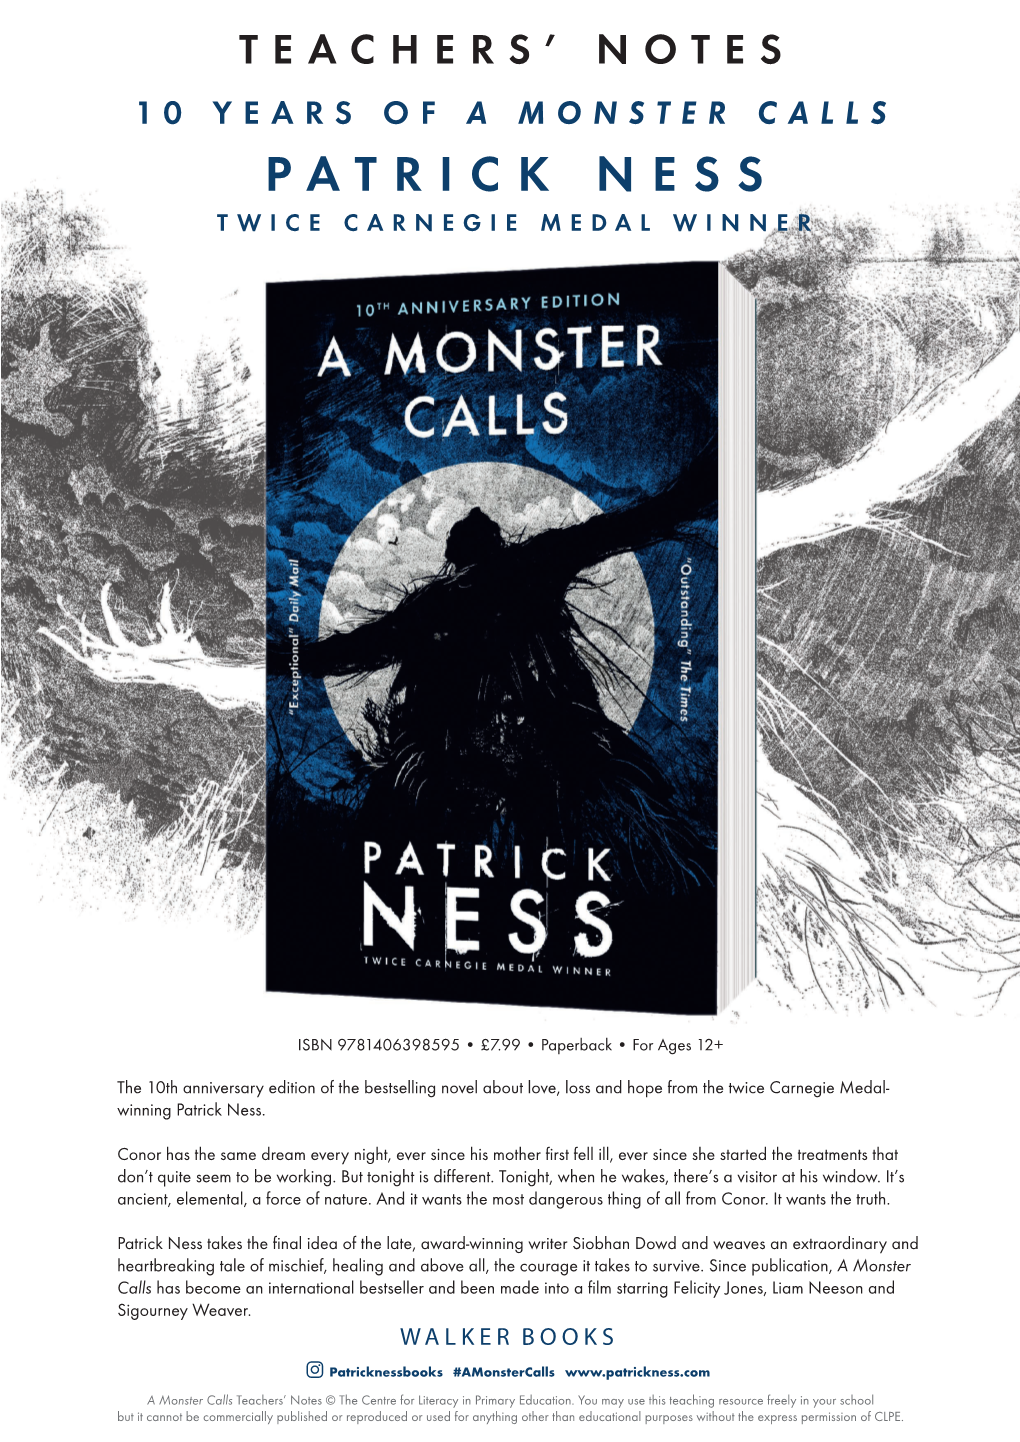 A Monster Calls Patrick Ness Twice Carnegie Medal Winner